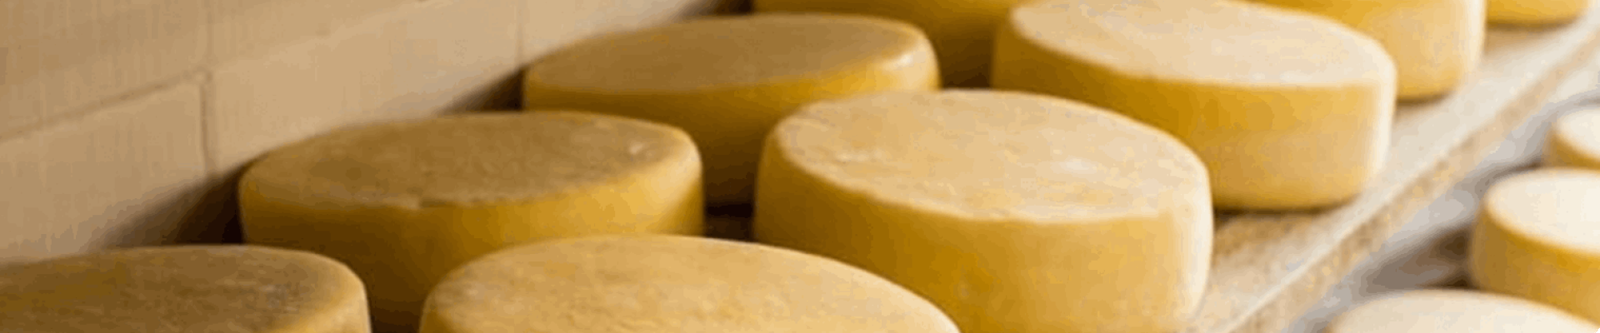 queijo2-1-1600x1300